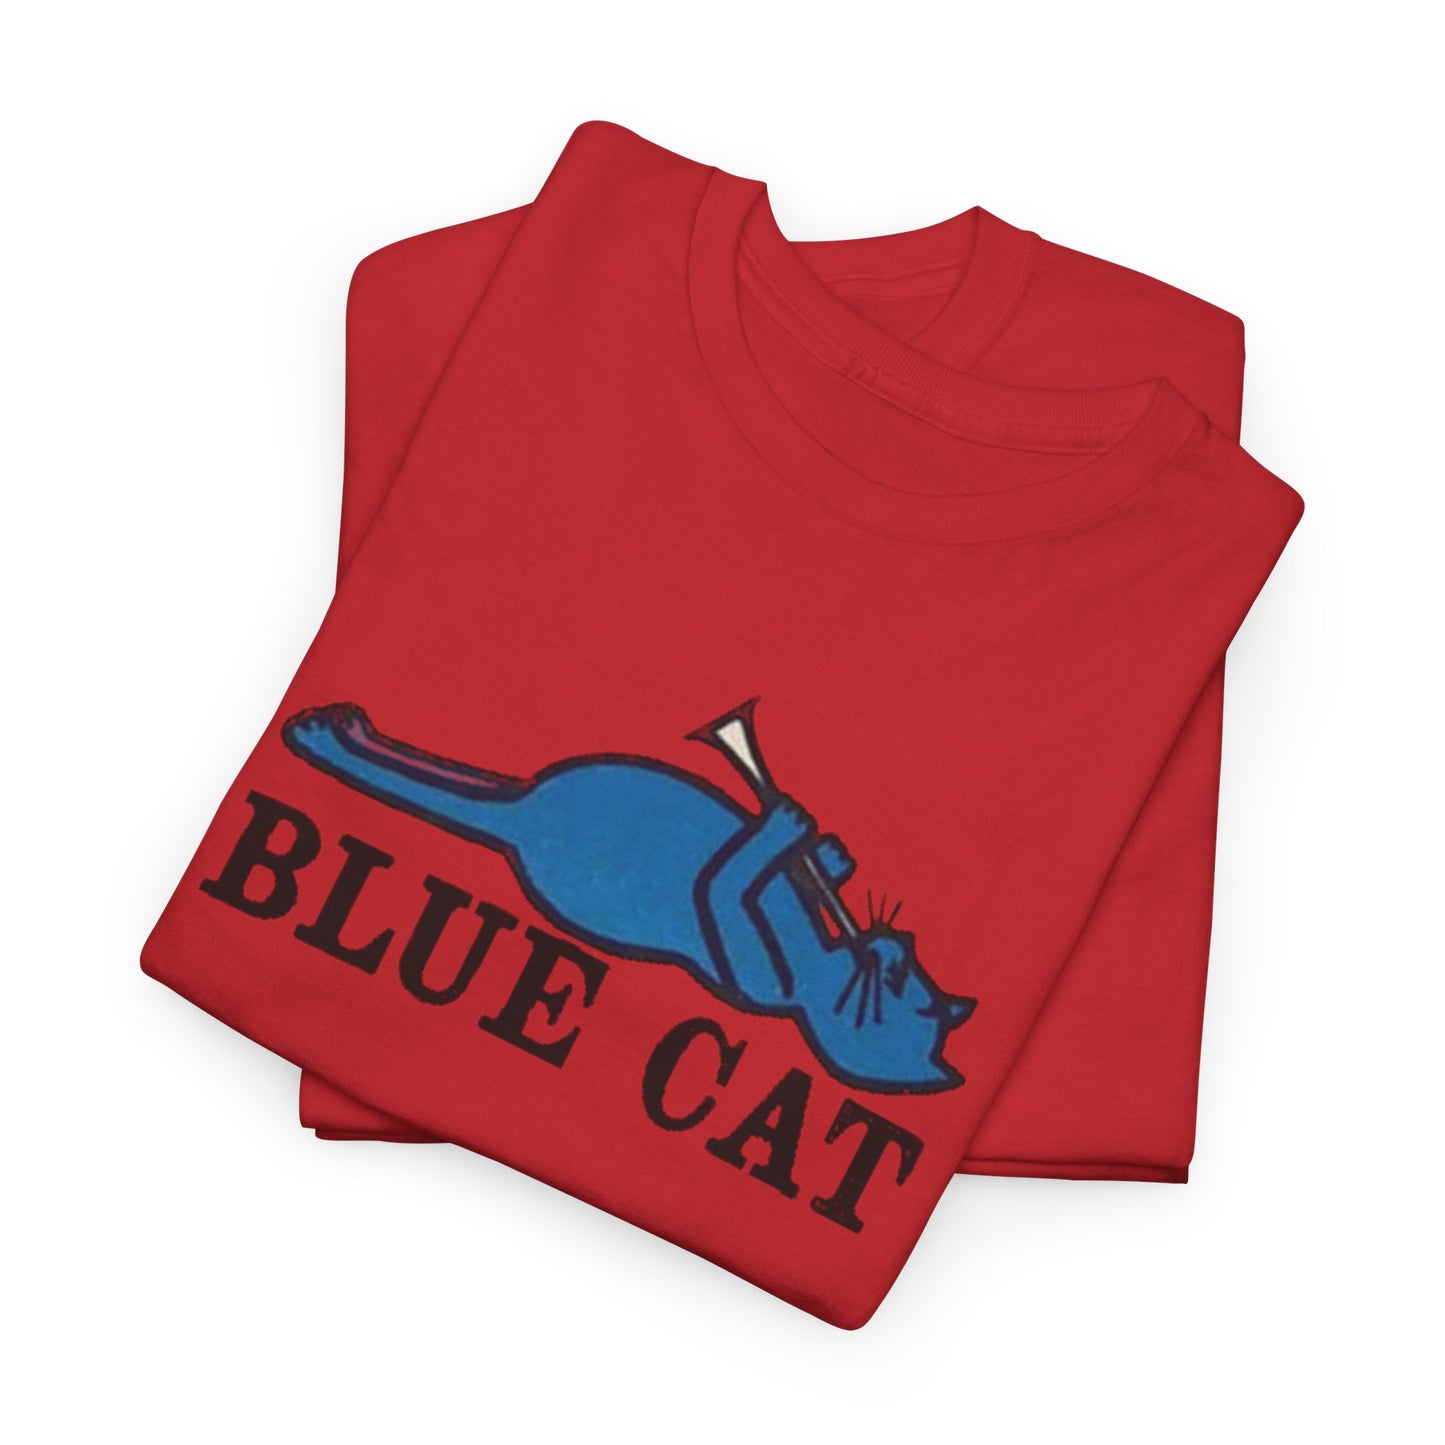 Music Label Tee #104: Blue Cat